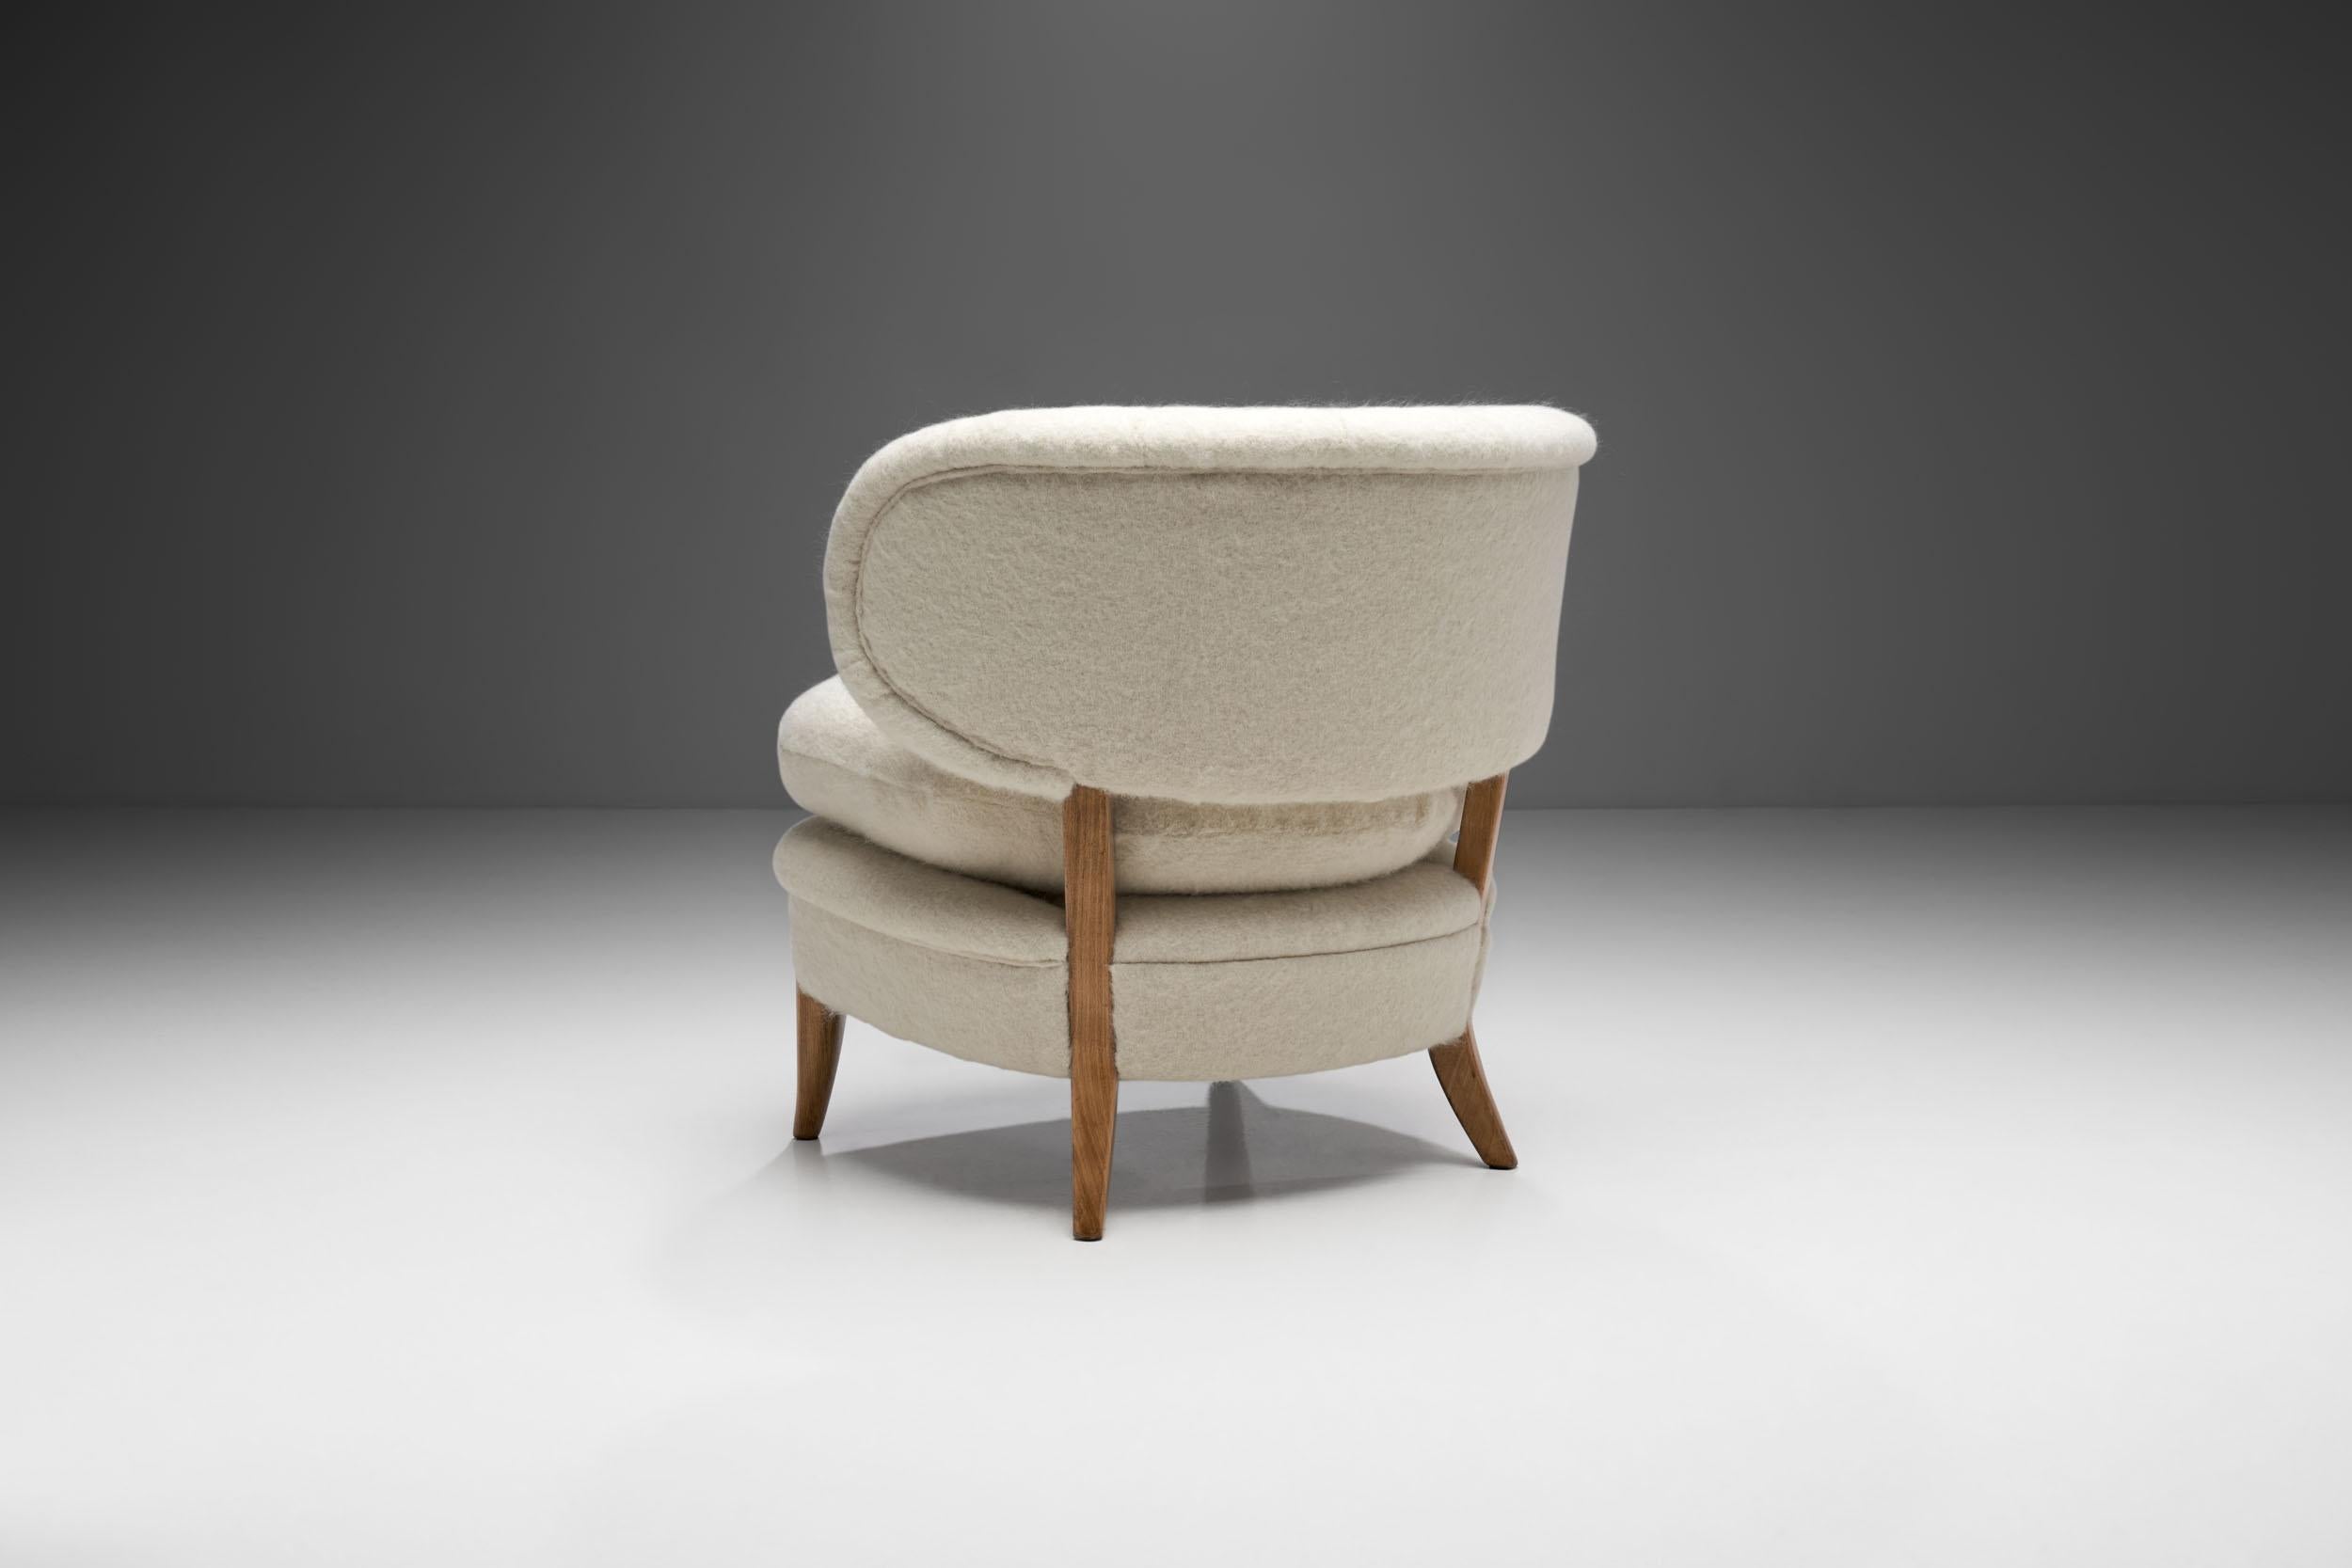 Mid-20th Century “Schulz” Lounge Chair by Otto Schulz for Jio Möbler Jönköping, Sweden, 1940s